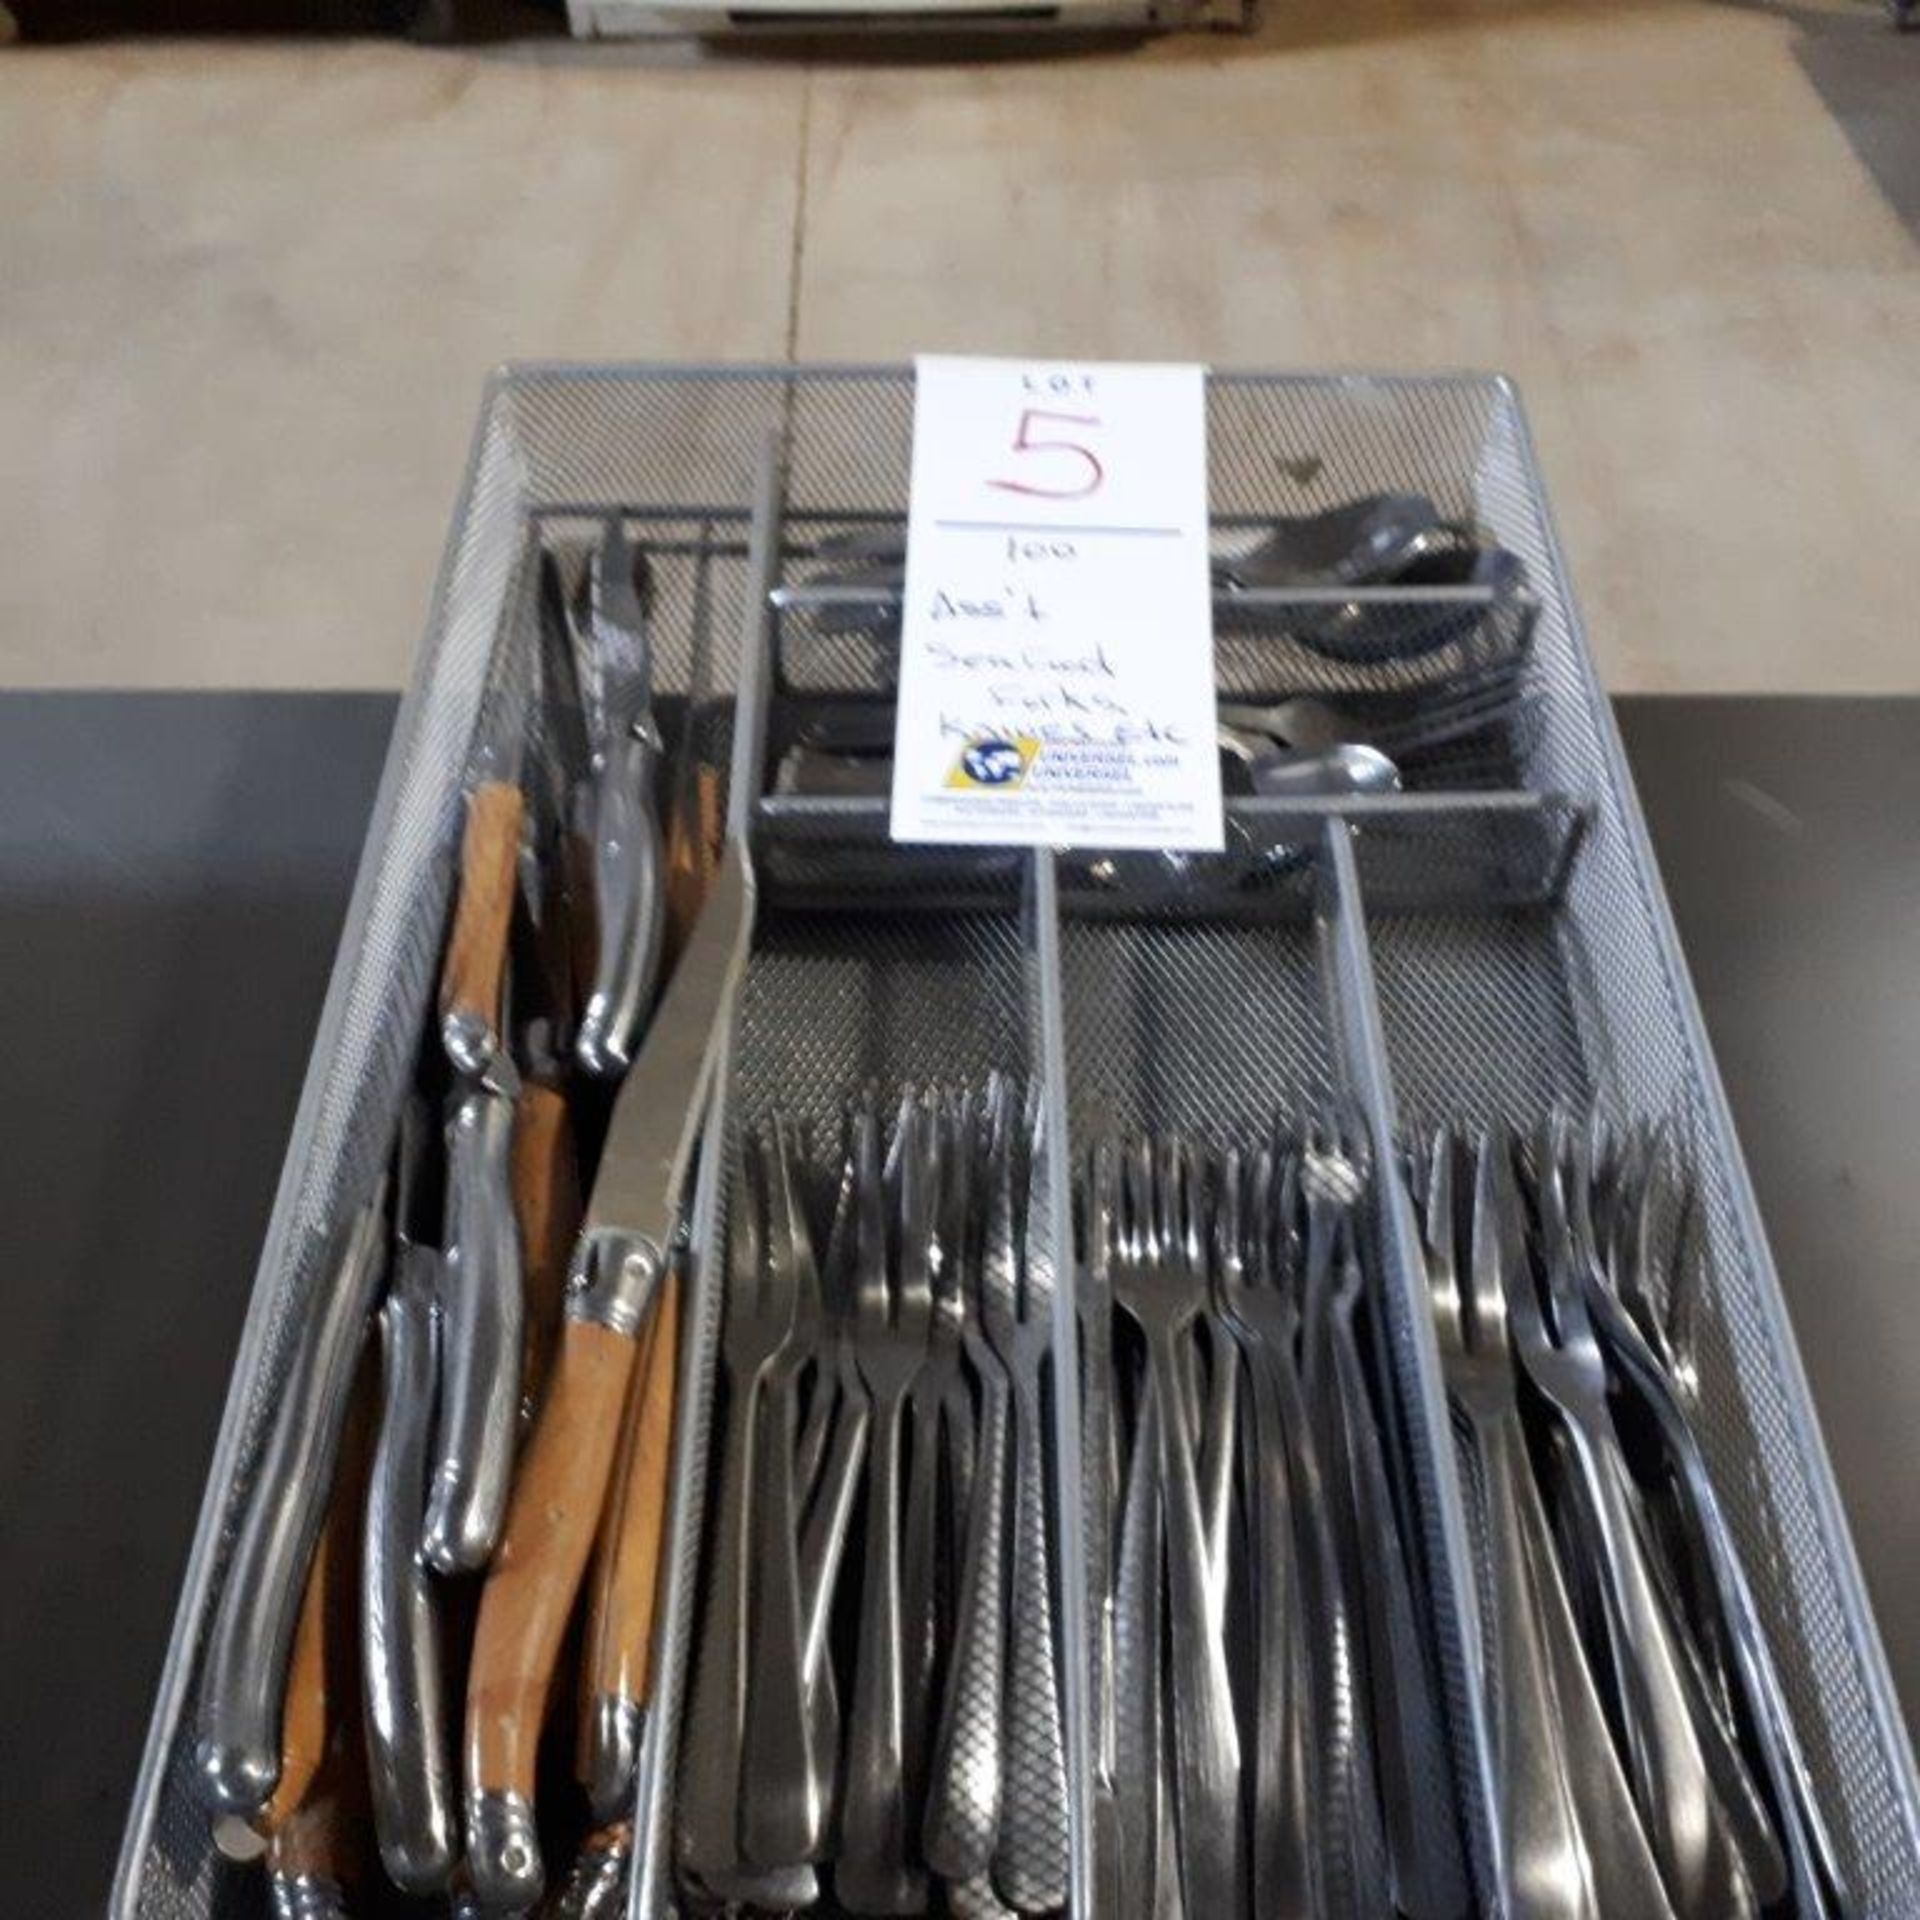 Assorted seafood forks, knives, etc…